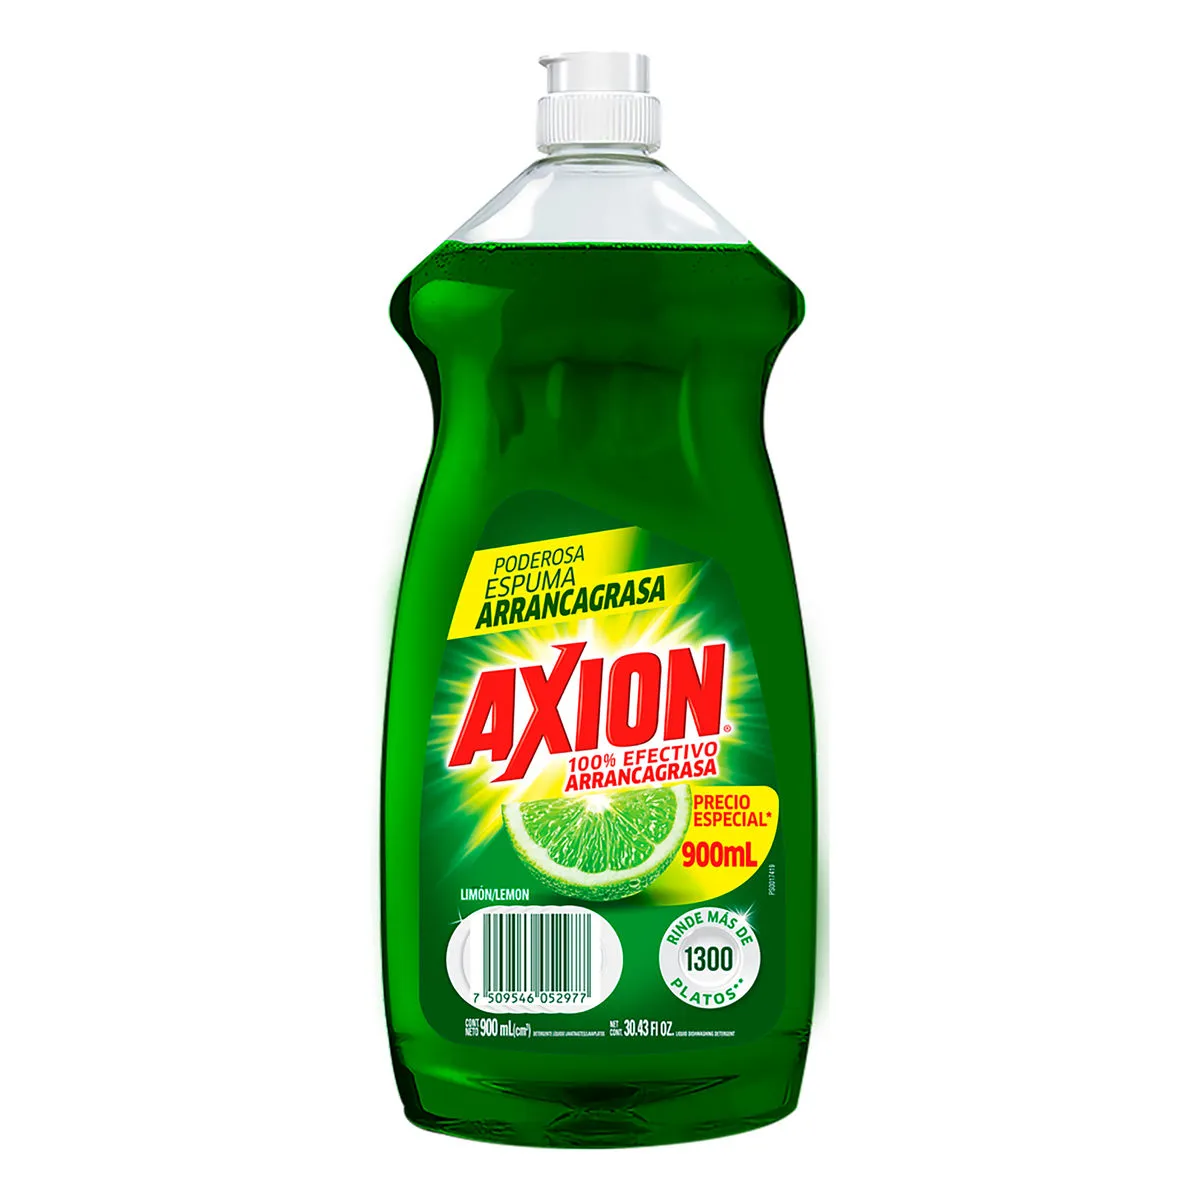 Lavatrastes liquido de Axion limon de 90 Fragancia a limón. contiene 900 ml es de facil aplicacion y fuerte poder arranca grasa.                                                                                                                                                                         0 ml                                     - AXION 900ML